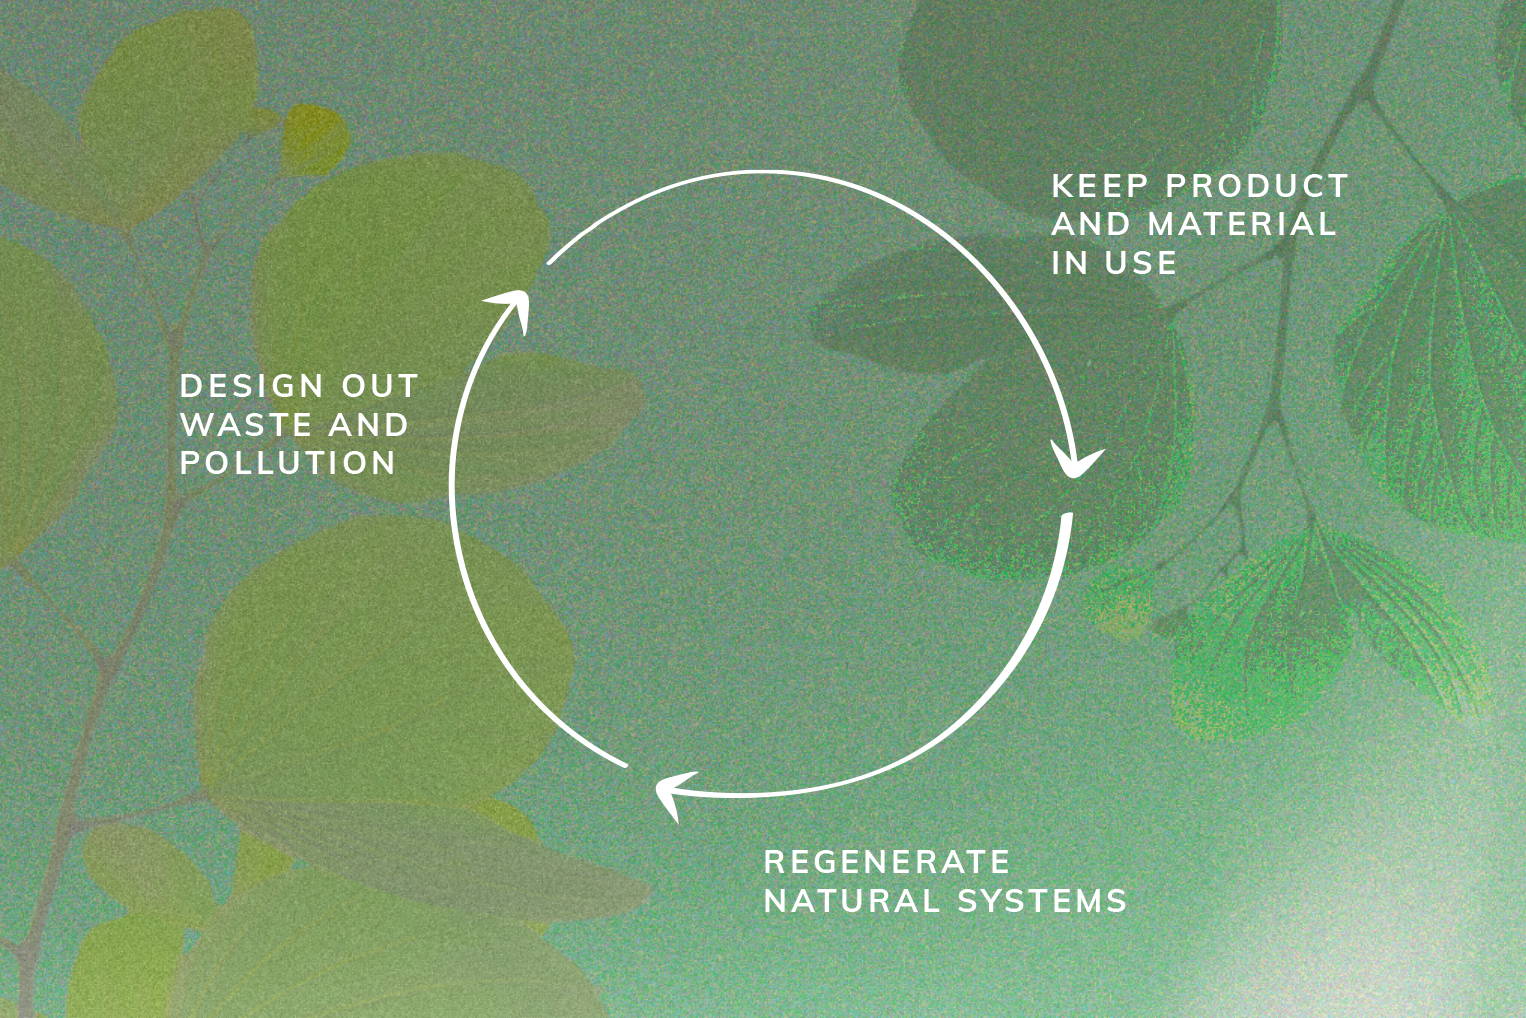 principals of the circular economy - sustainable organic loose leaf tea